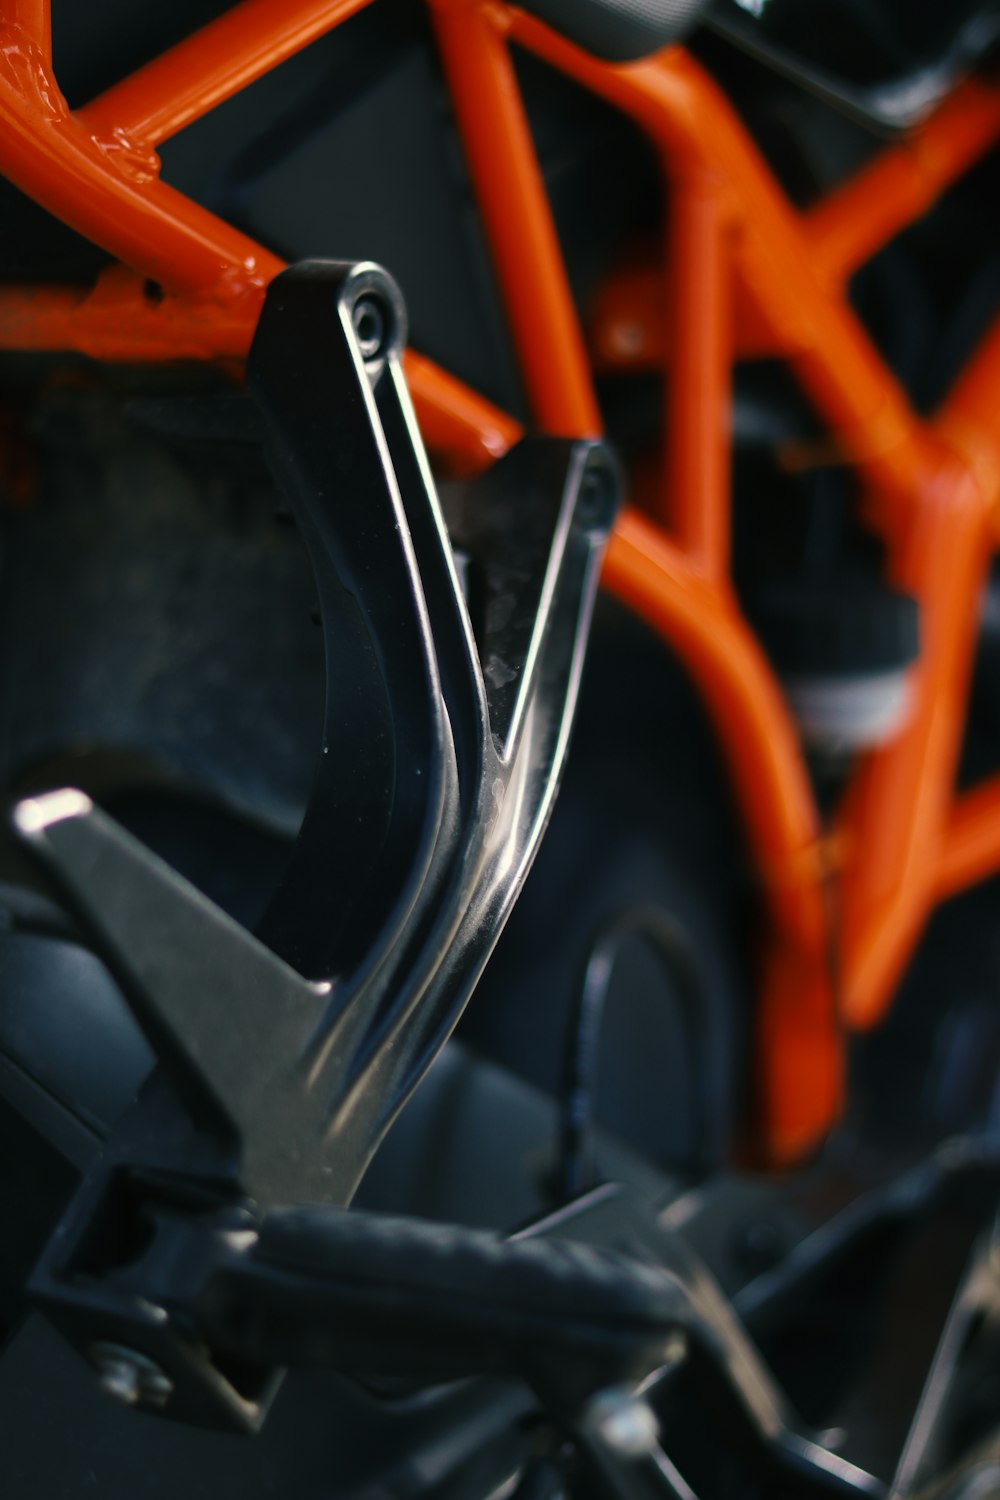 a close up of an orange and black bike frame